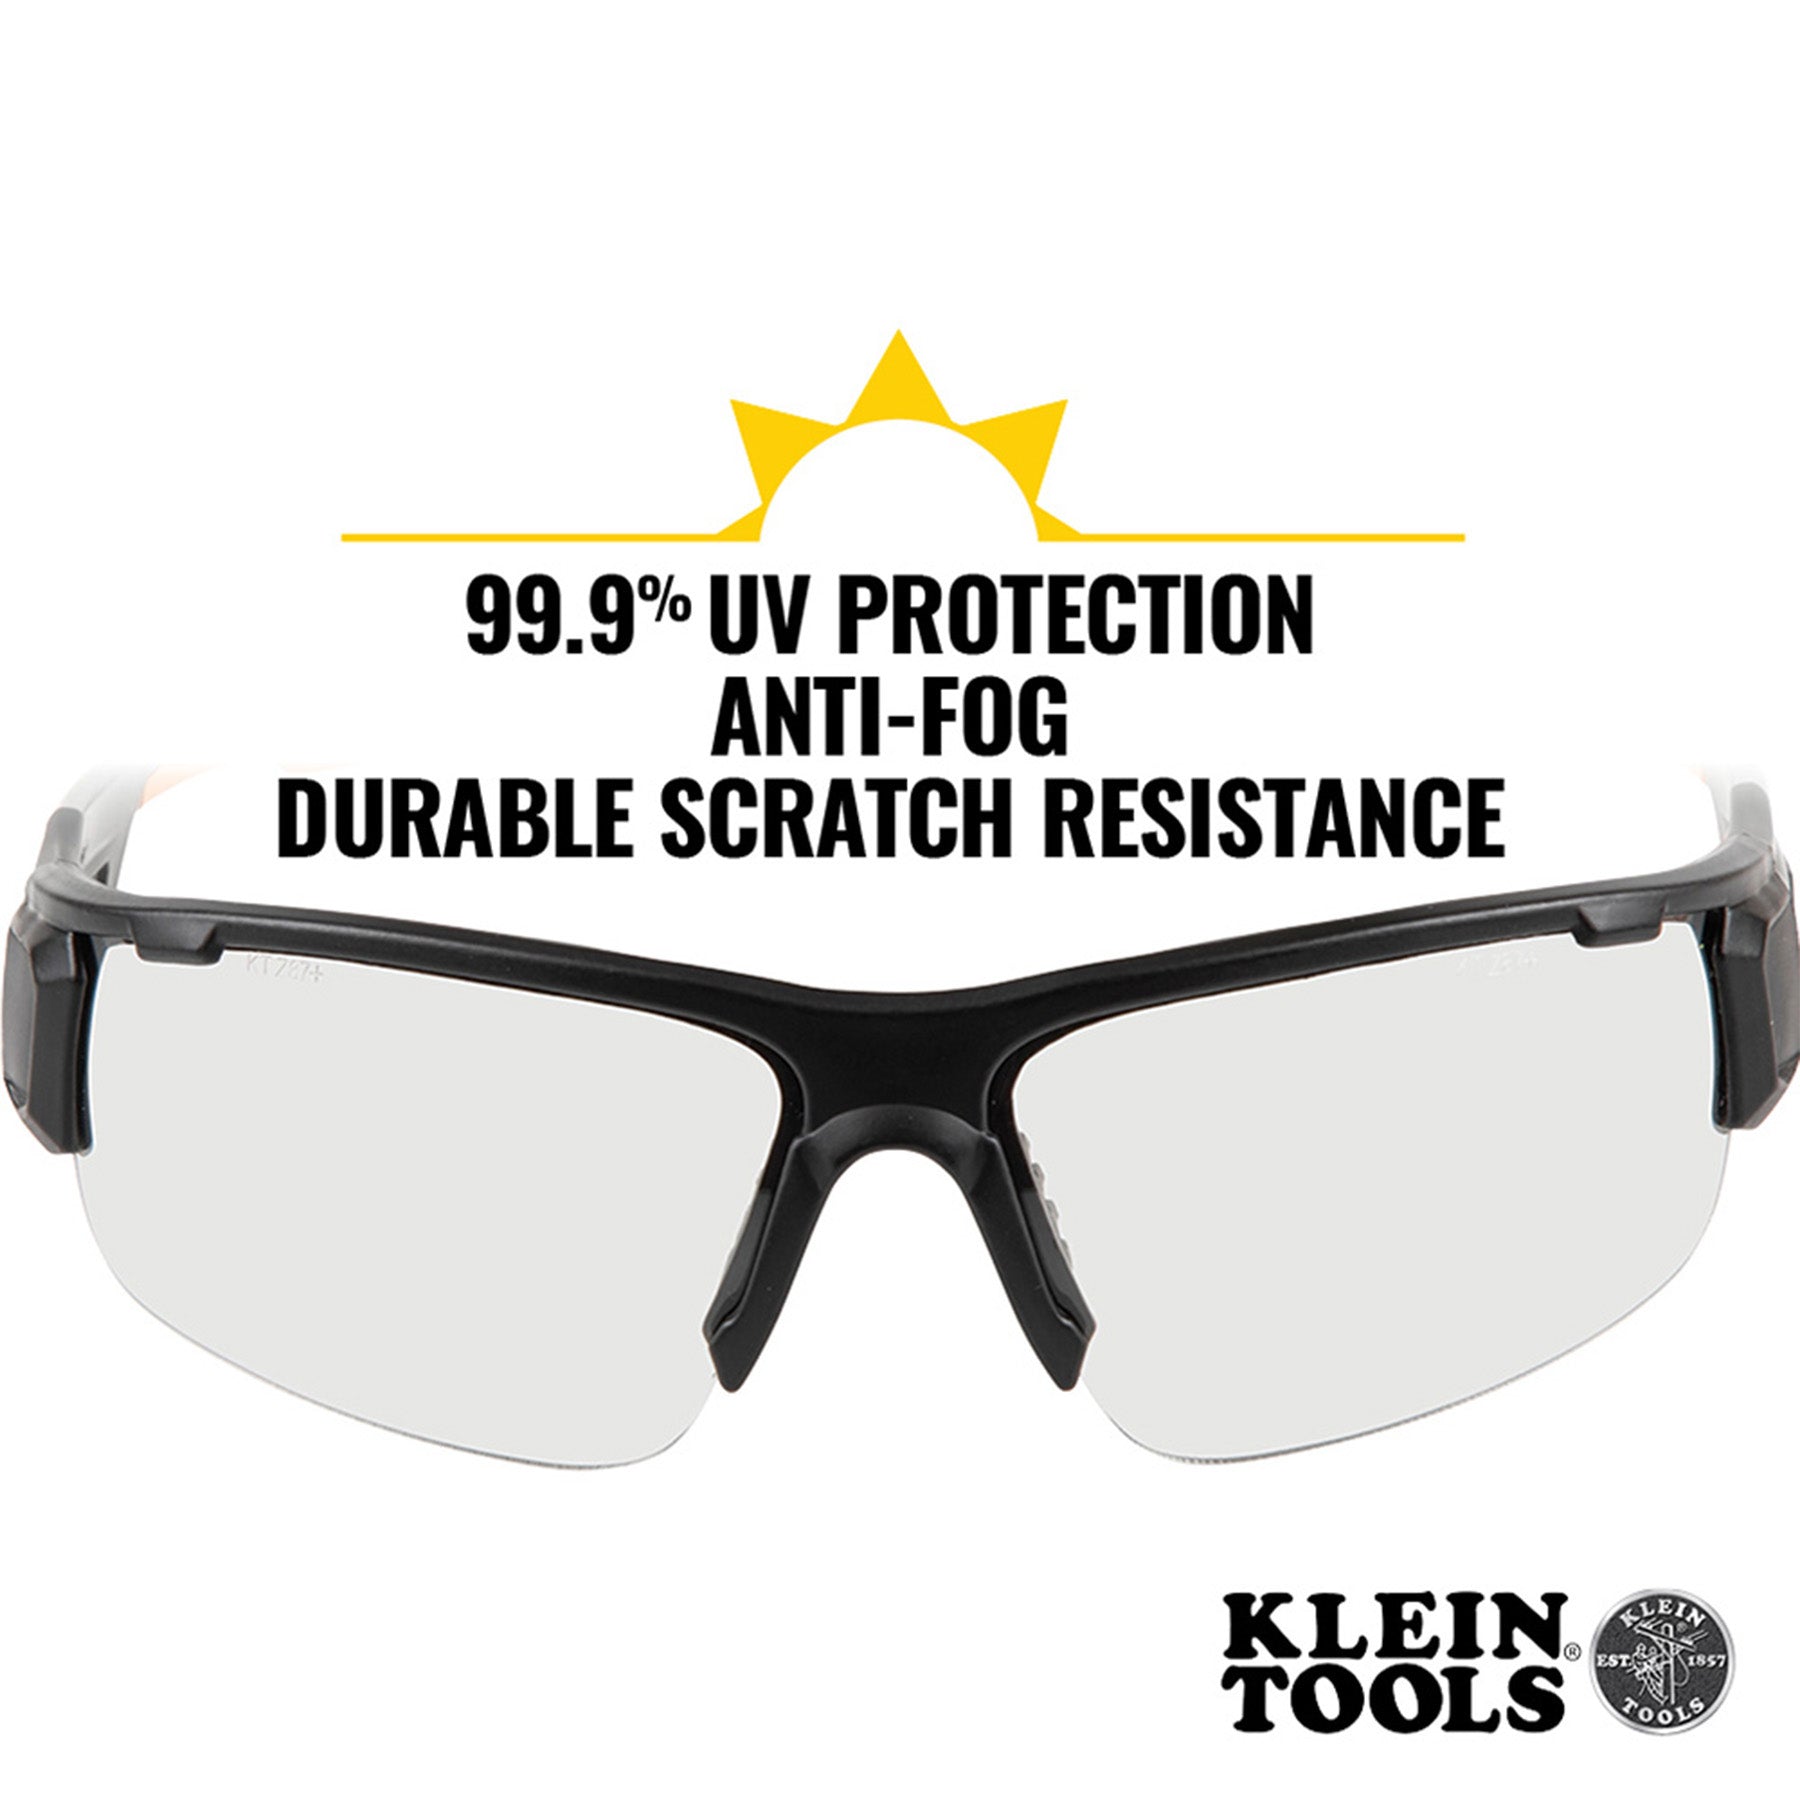 Klein Tools Standard Safety Glasses, Clear Lens, 2-Pack Part Number: KLN 60171